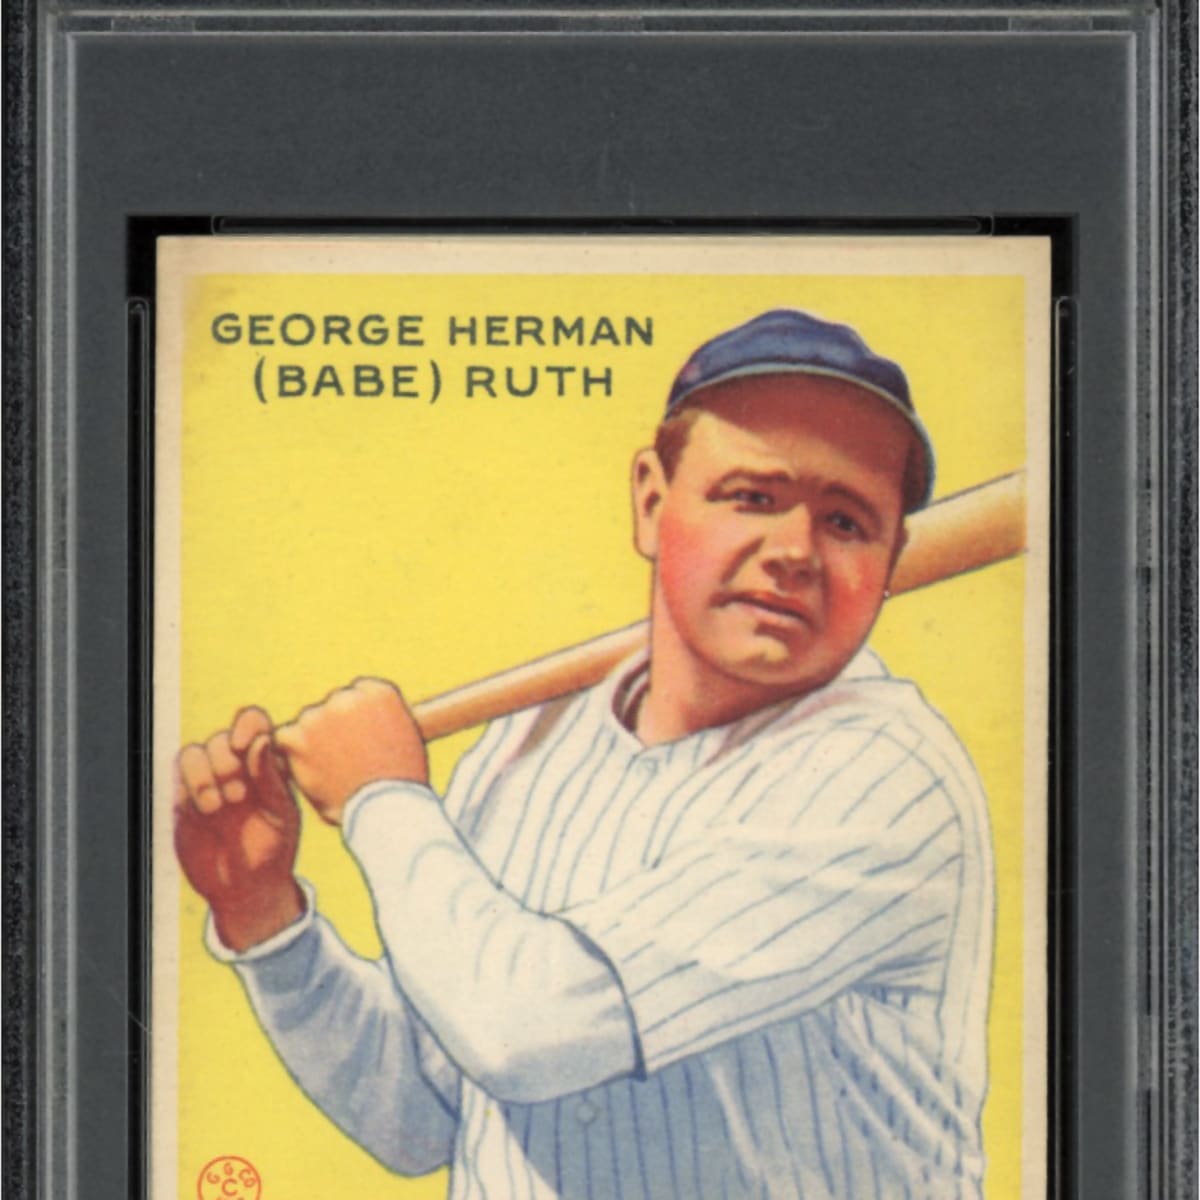 Memory Lane to display Babe Ruth cards at NSCC - Beckett News